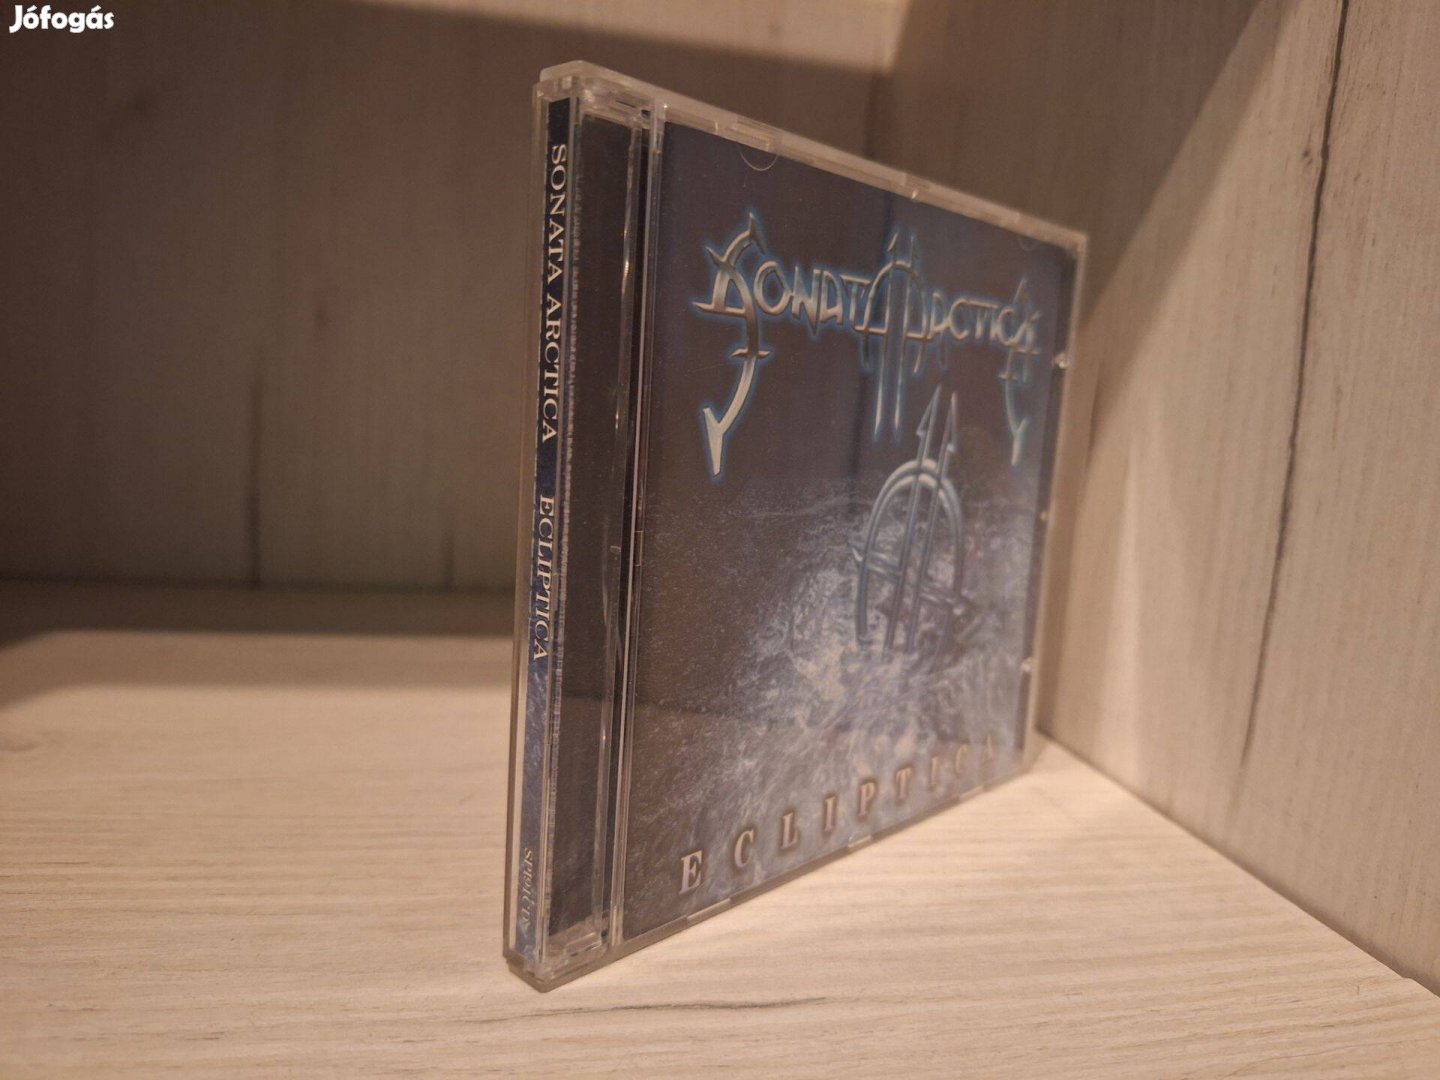 Sonata Arctica - Ecliptica CD